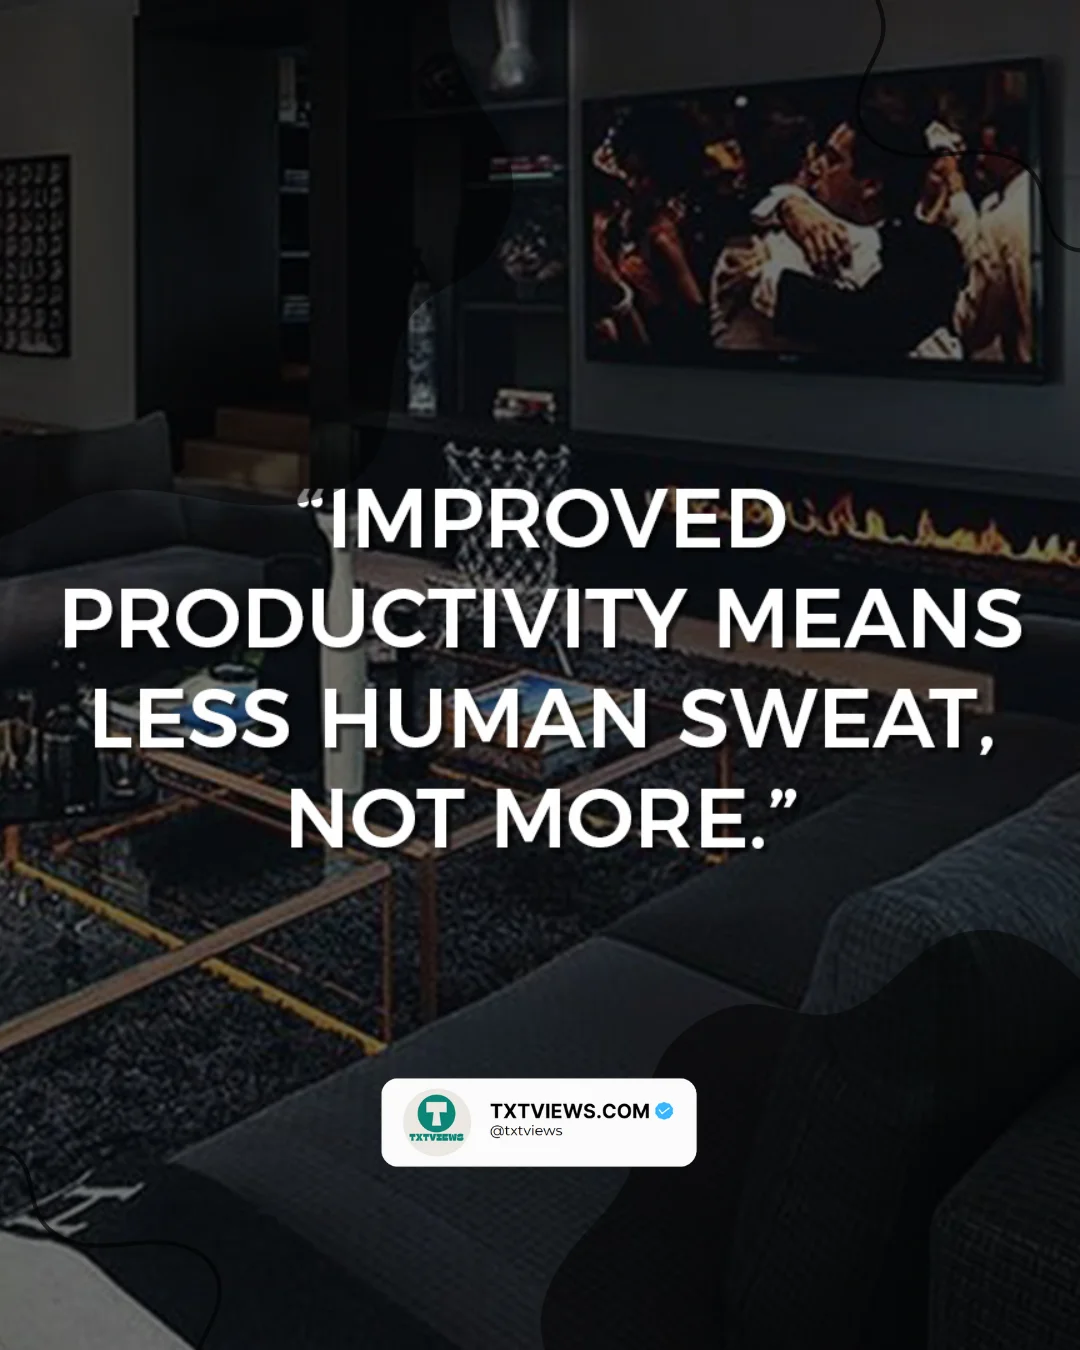 motivation blog post image from @txtviews on instagram